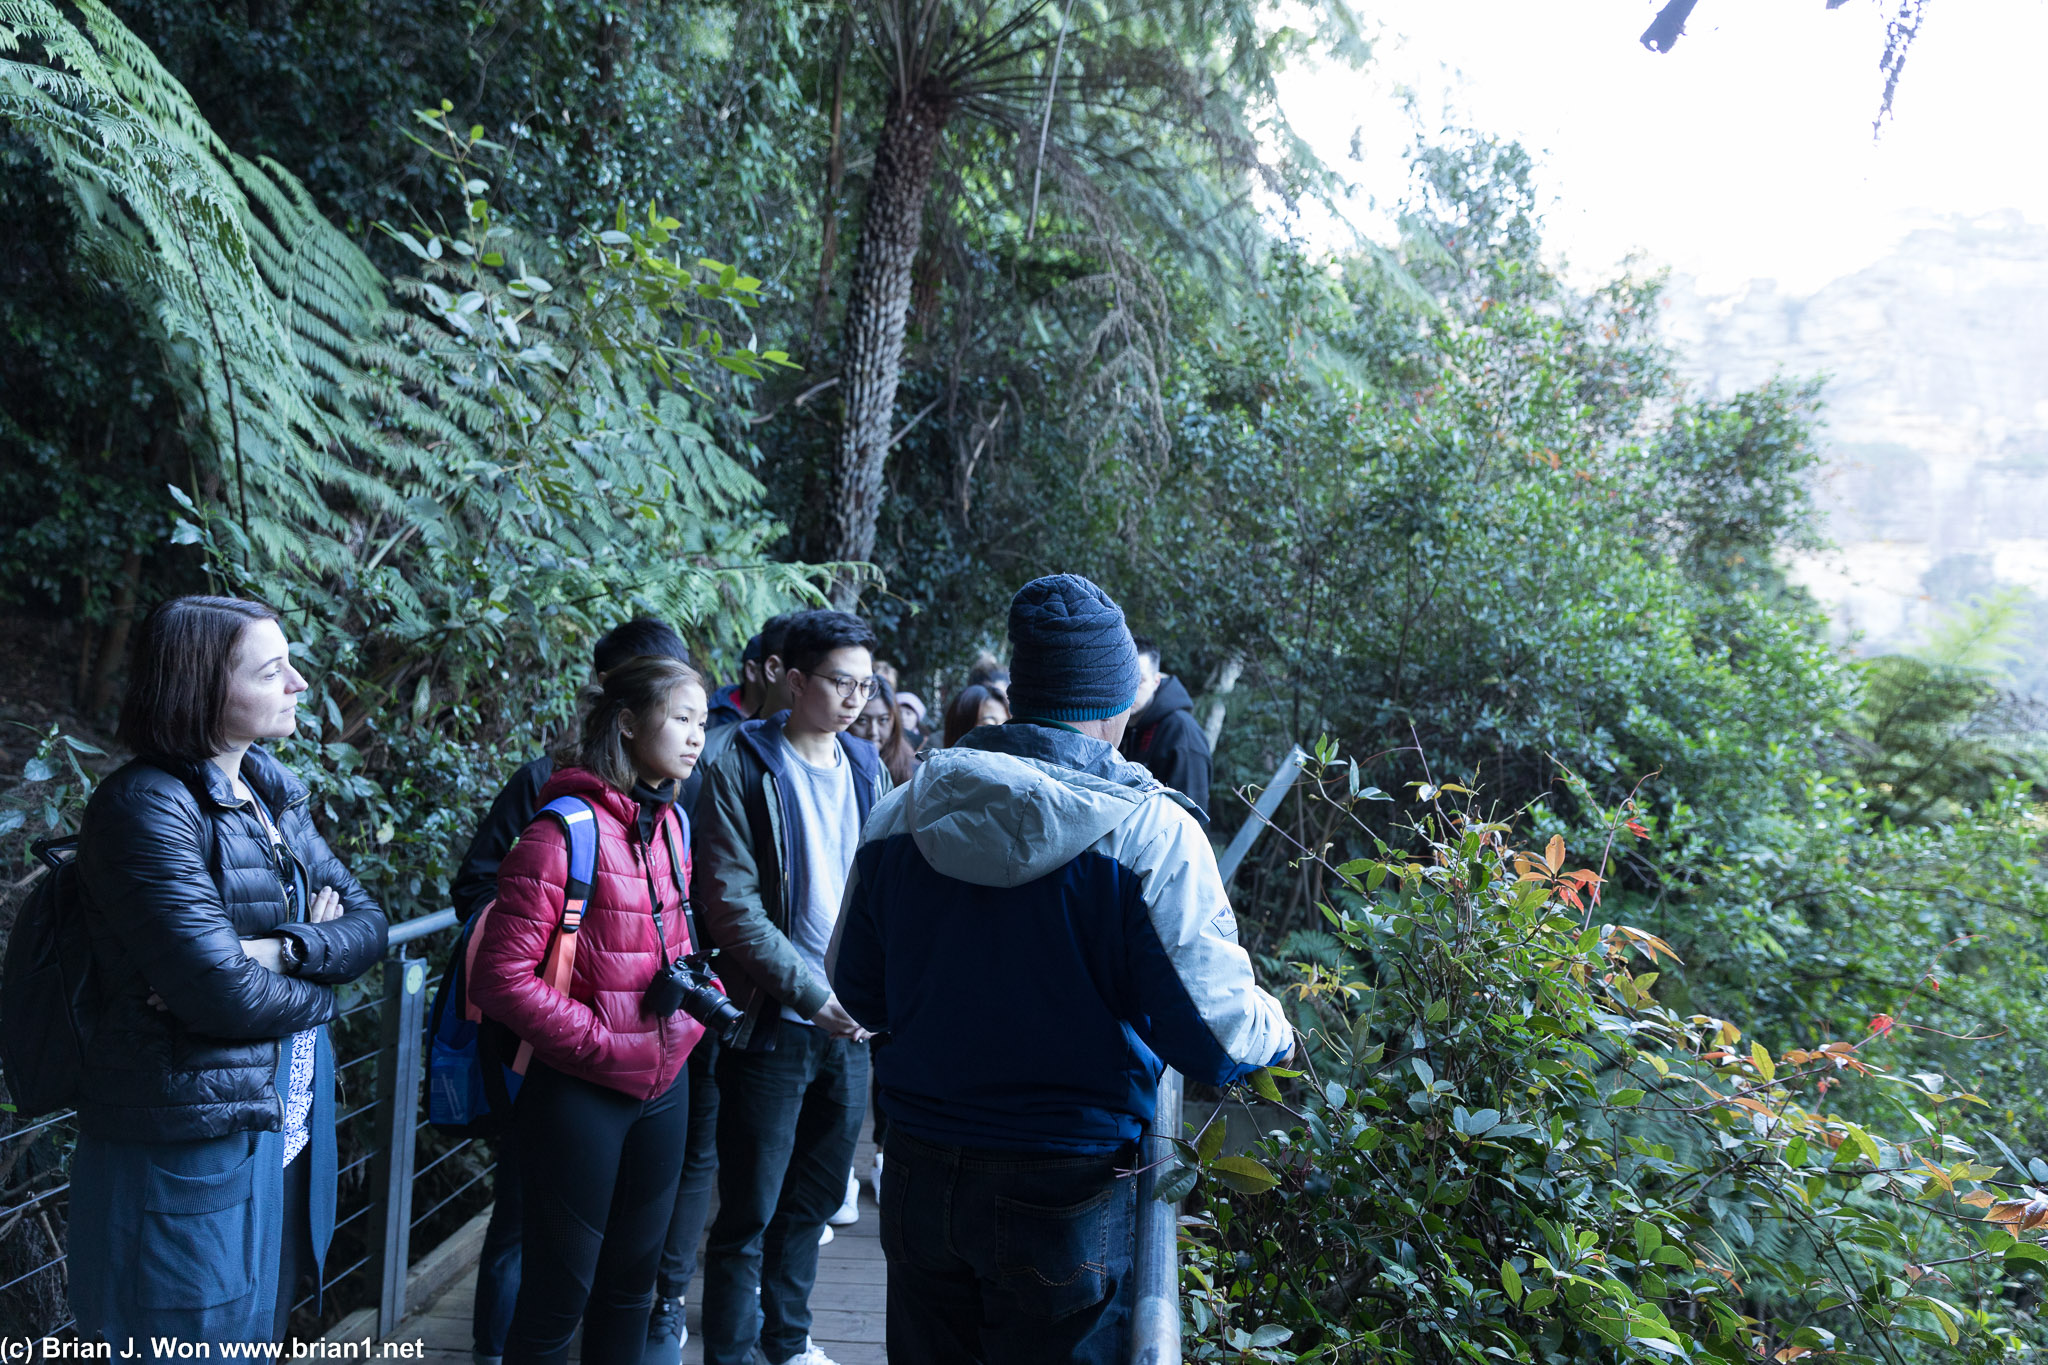 Tour guide explaining the rainforest.